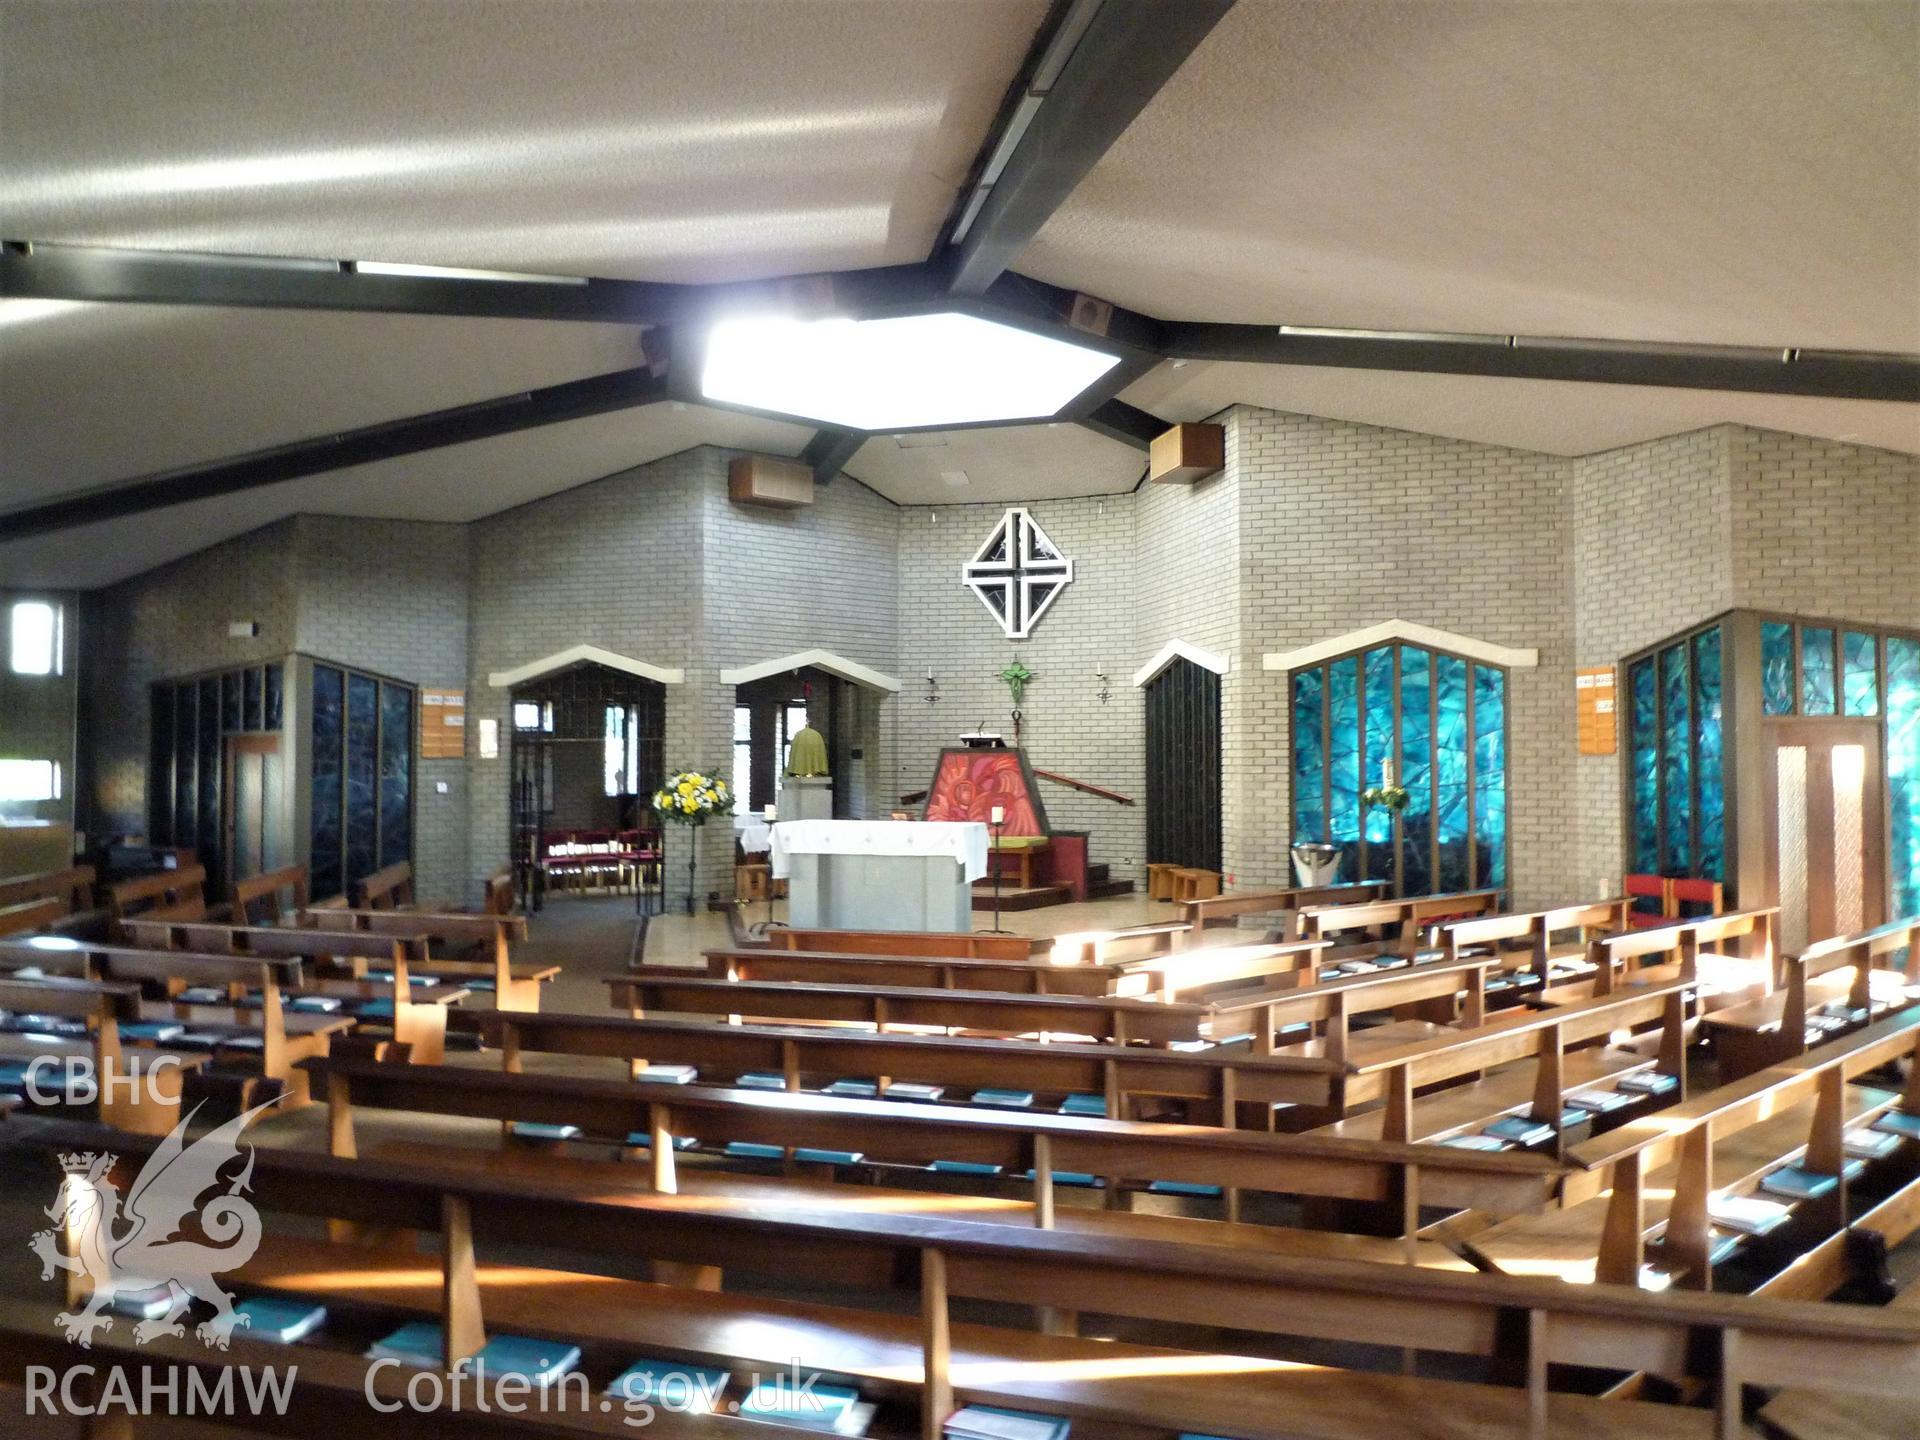 Digital colour photograph showing interior of Christ the King Catholic church, Llanishen.